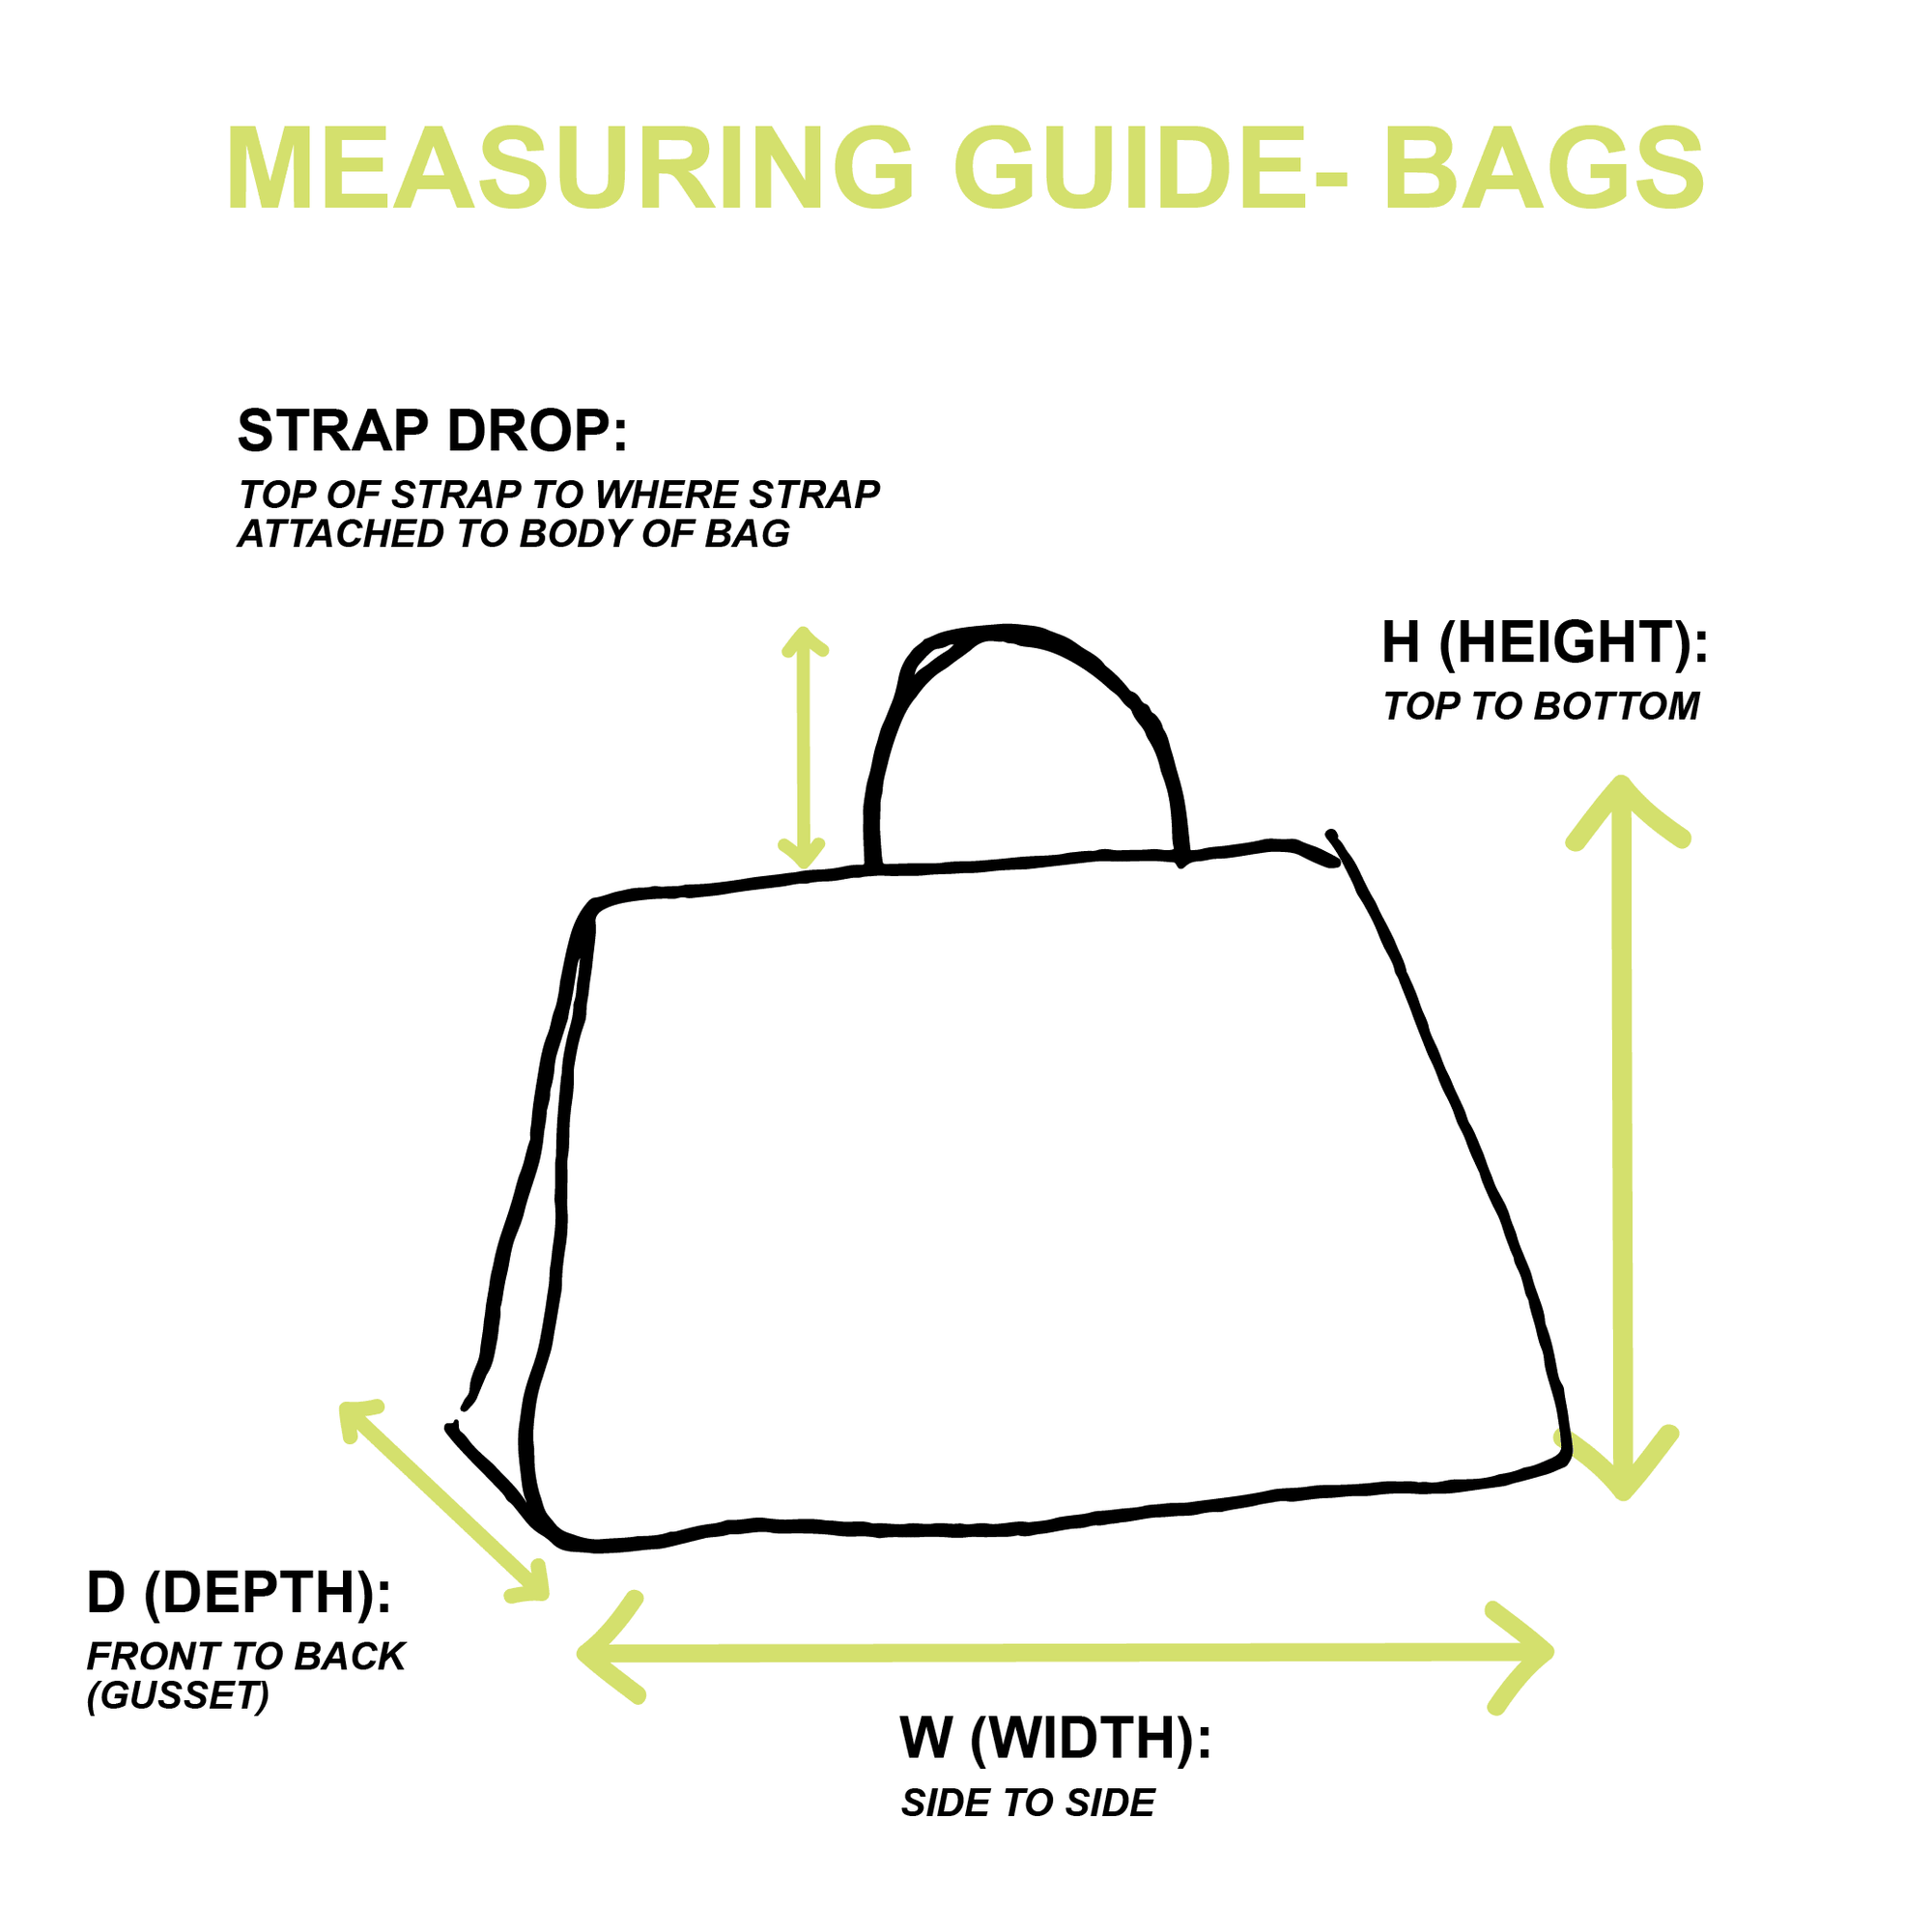 Louis Vuitton Brown Monogram Shoulder Bag - Handbags